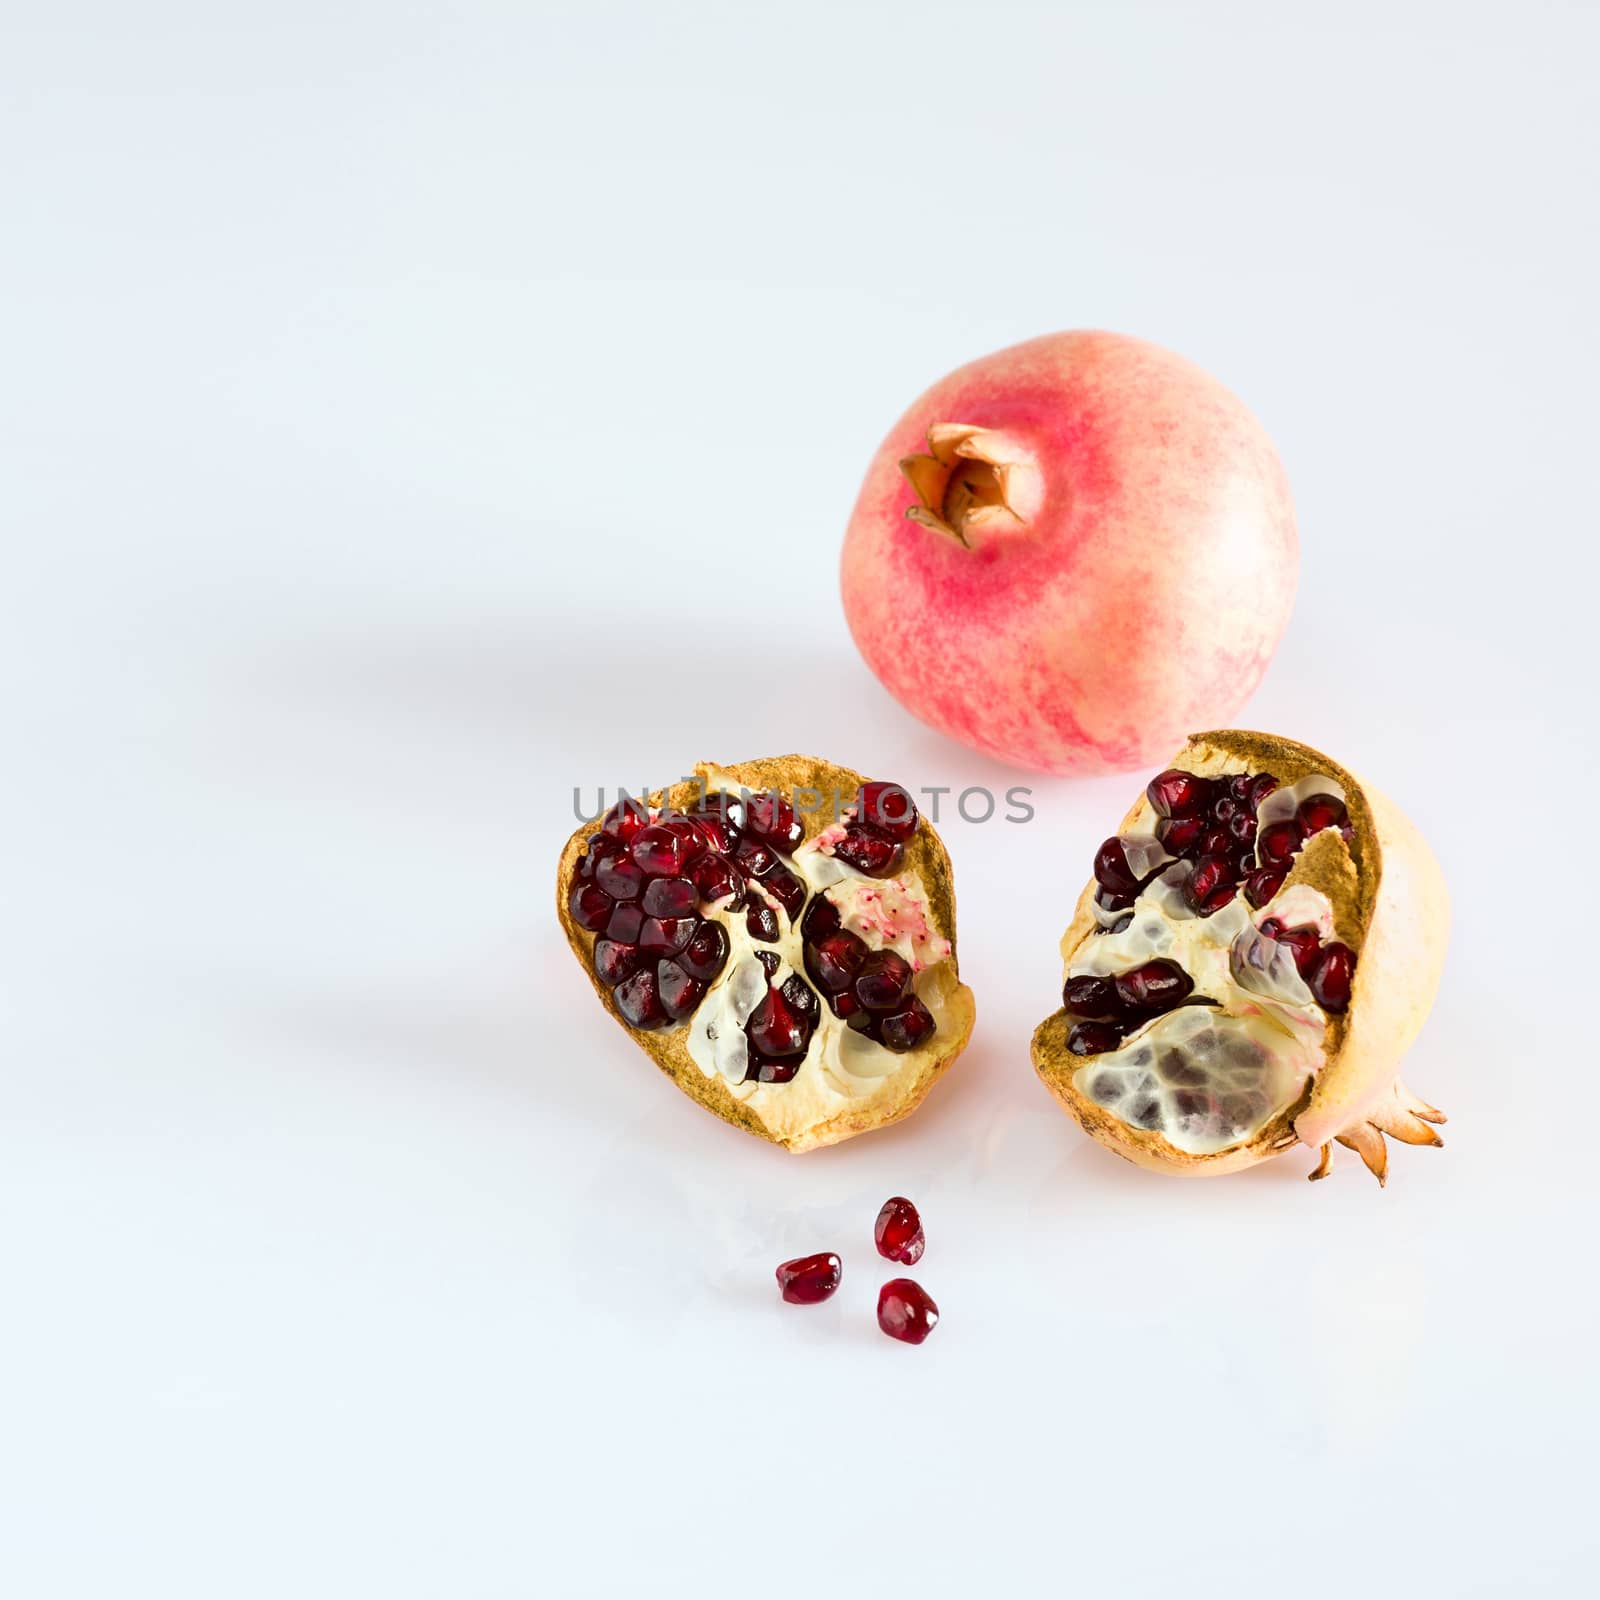 Juicy pomegranate fruits by LuigiMorbidelli